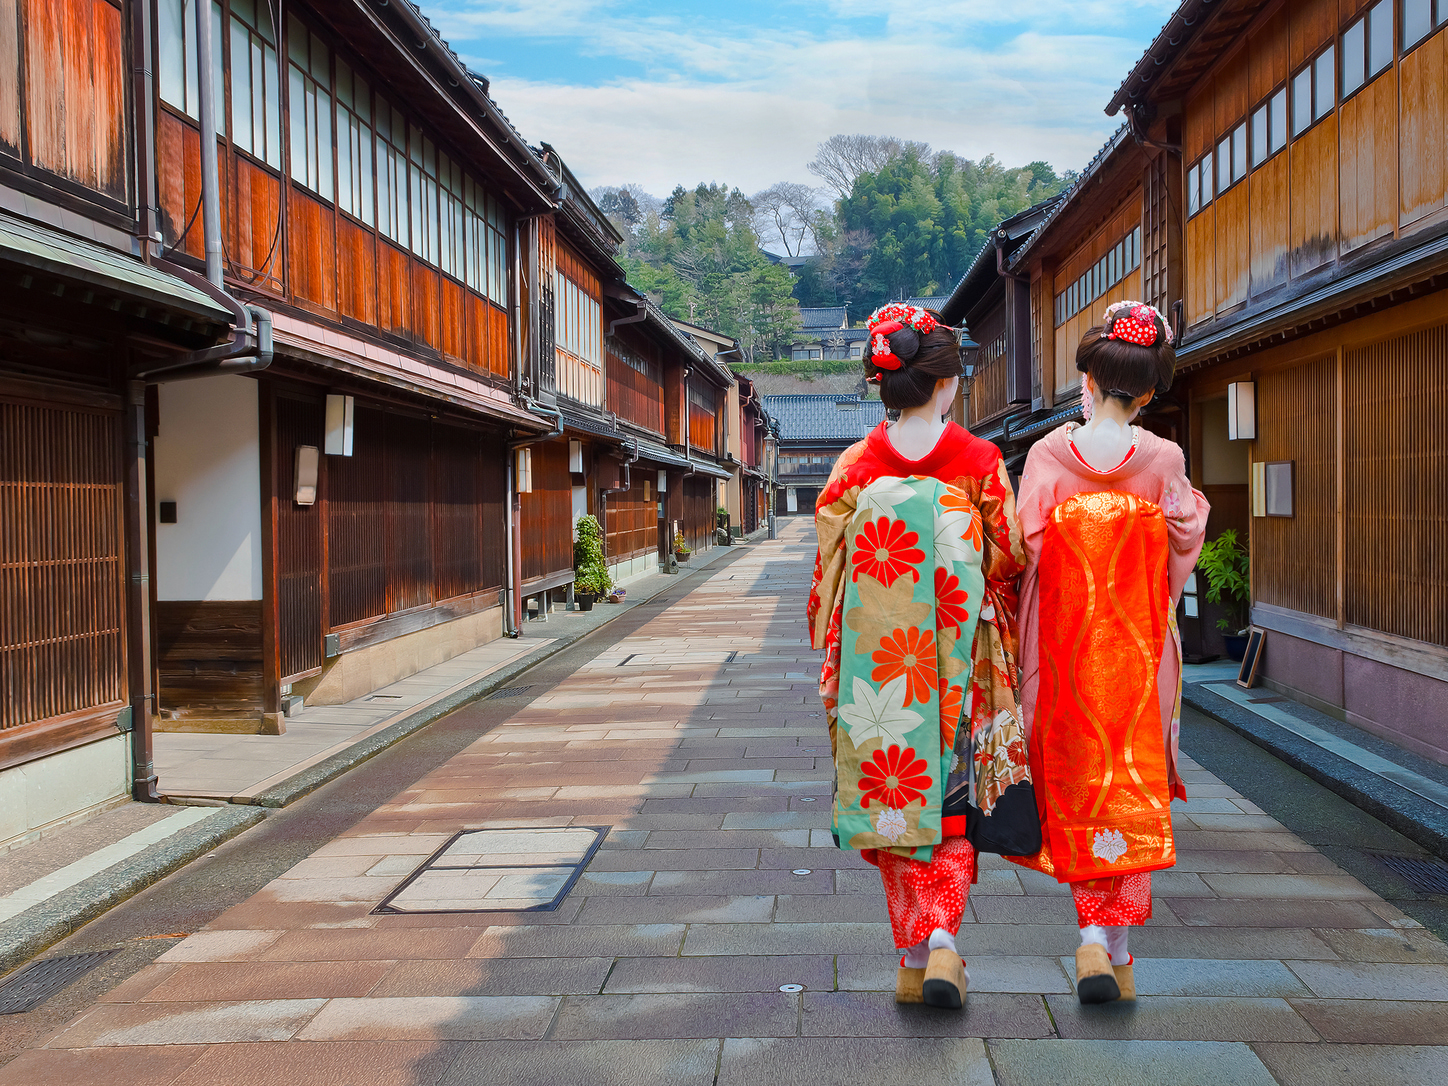 A Creative Kanazawa Getaway: What to Do and Where to Stay